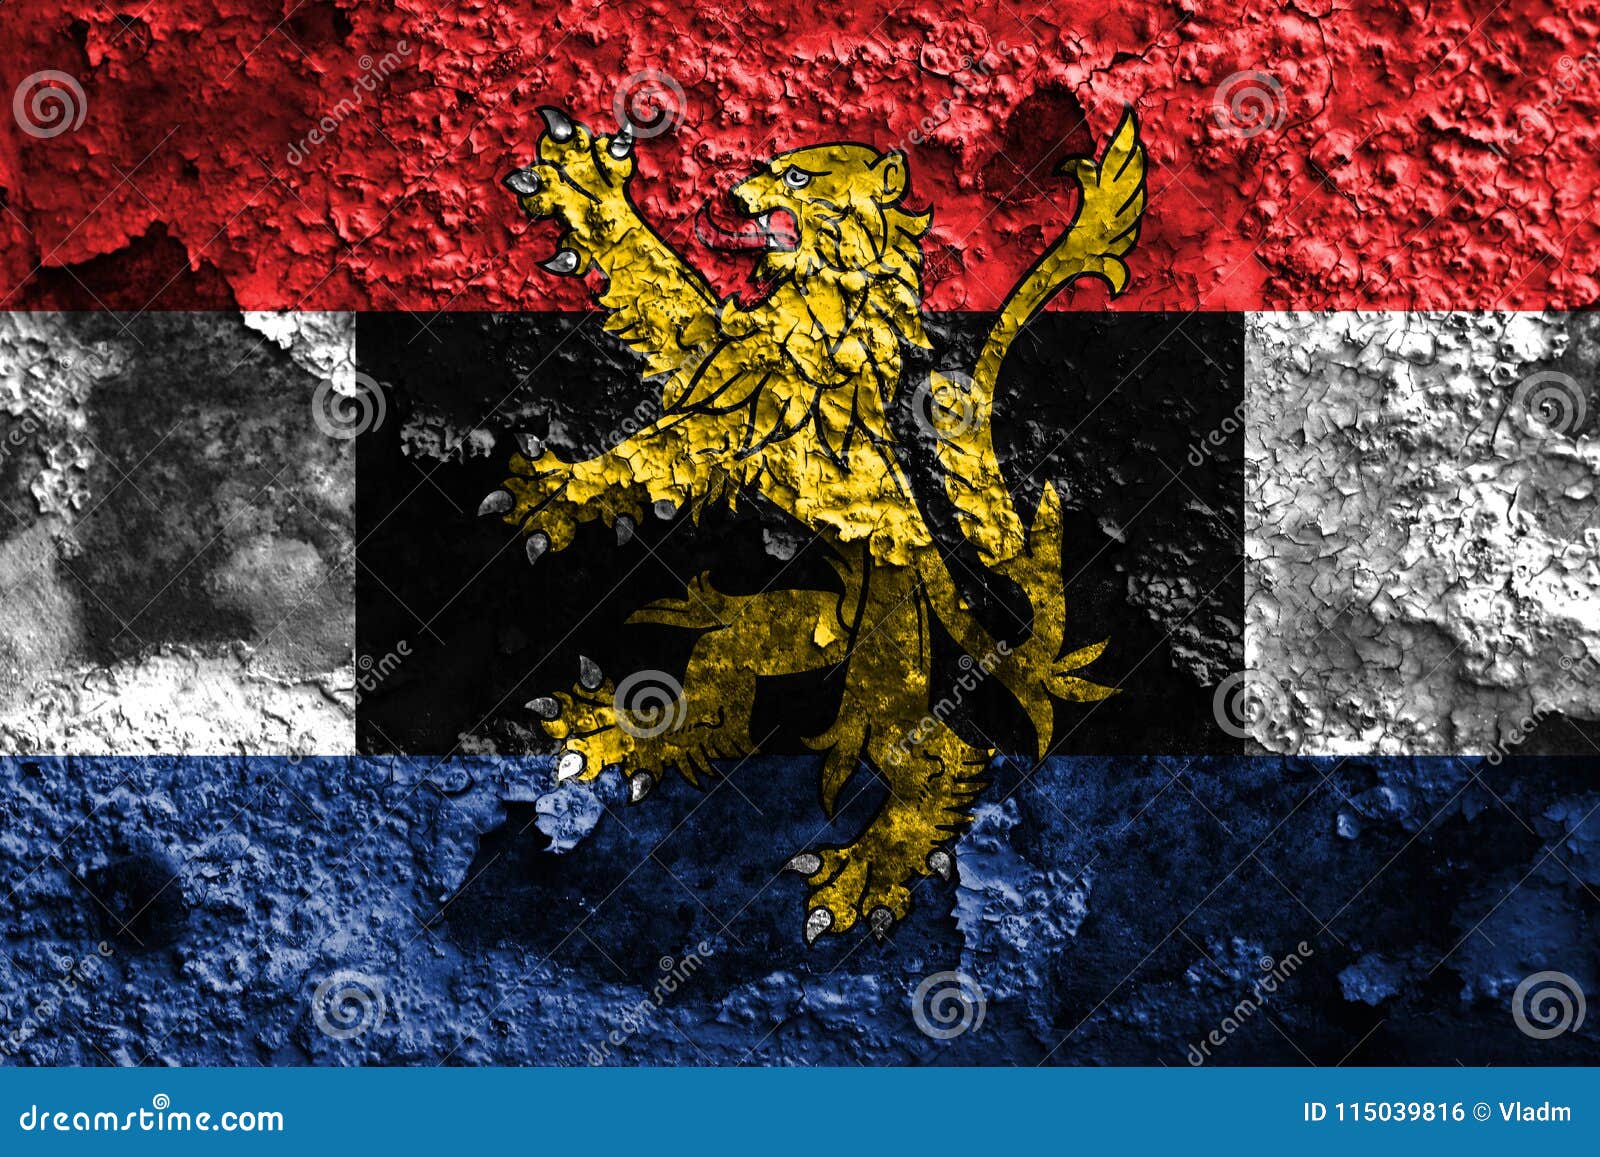 benelux grunge flag, politico-economic union of belgium, nethe